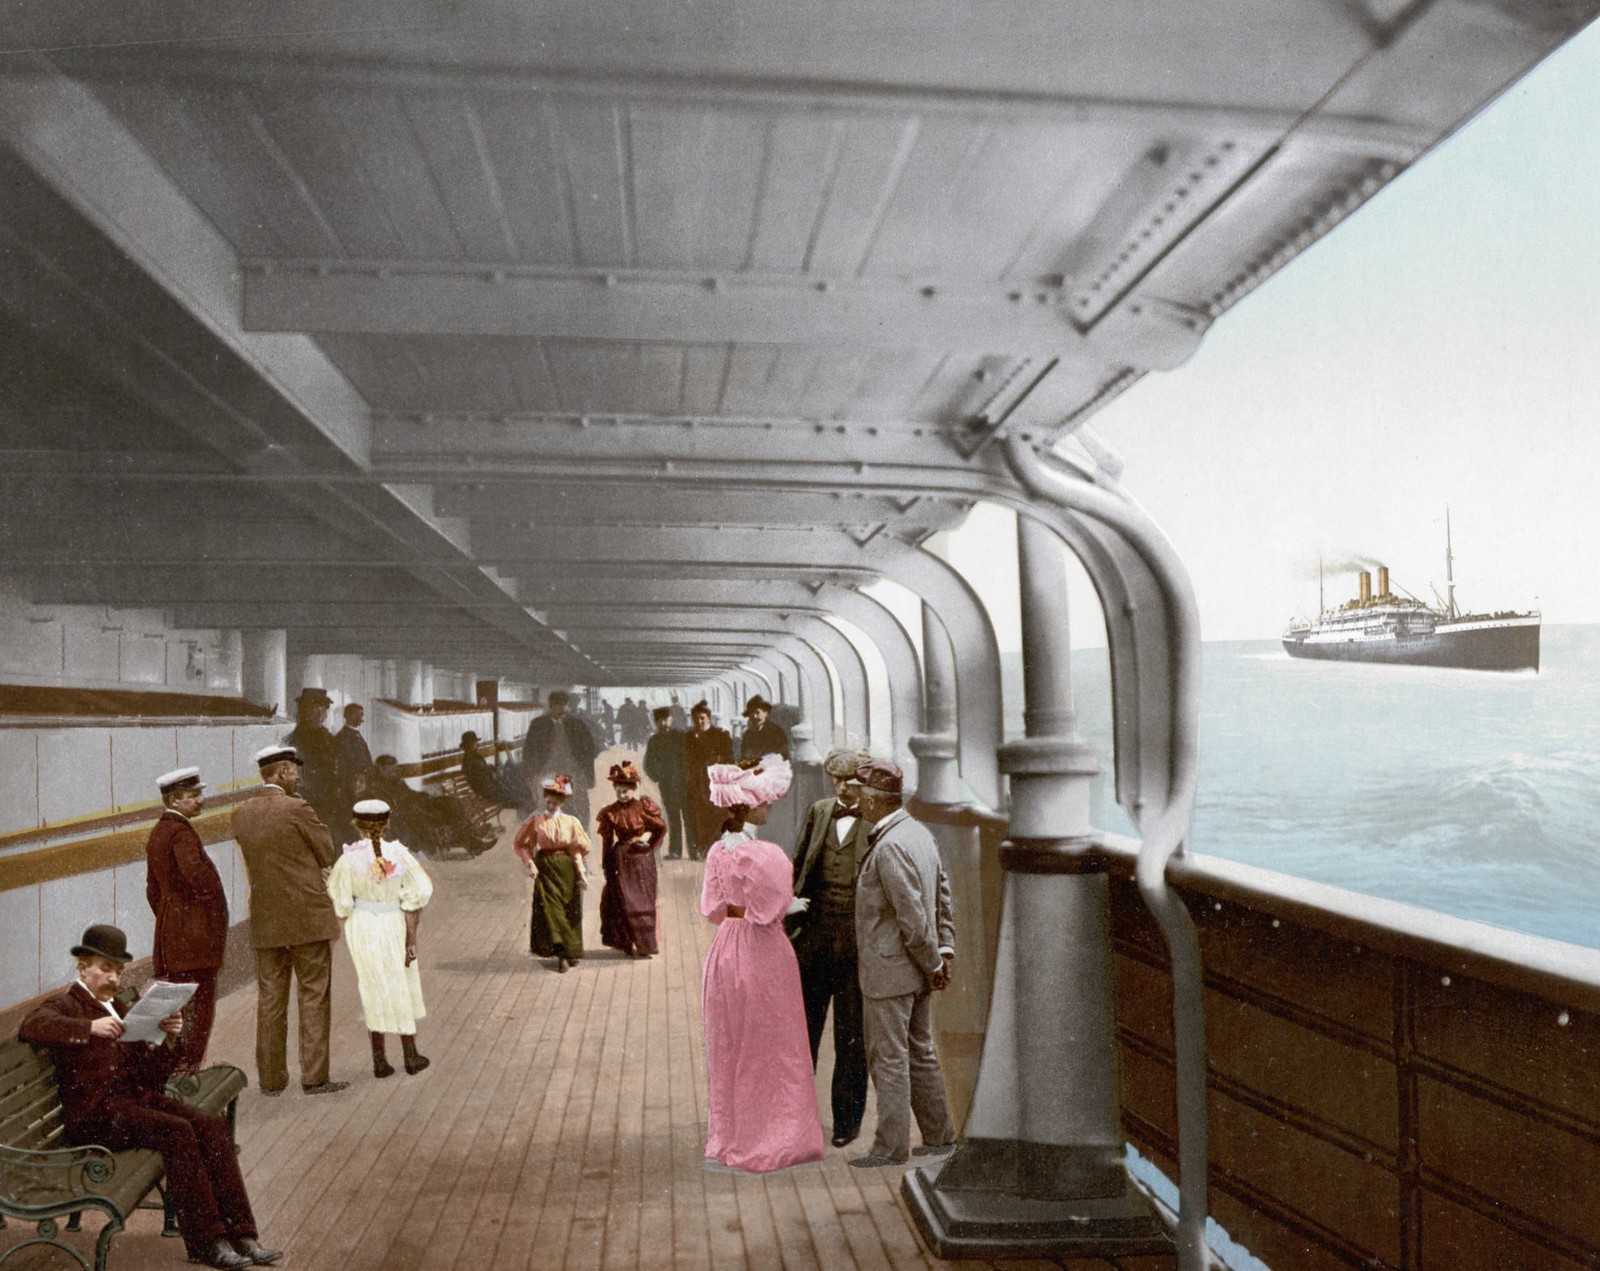 Victorian life on the promenade deck of an 1890s transatlantic steamship